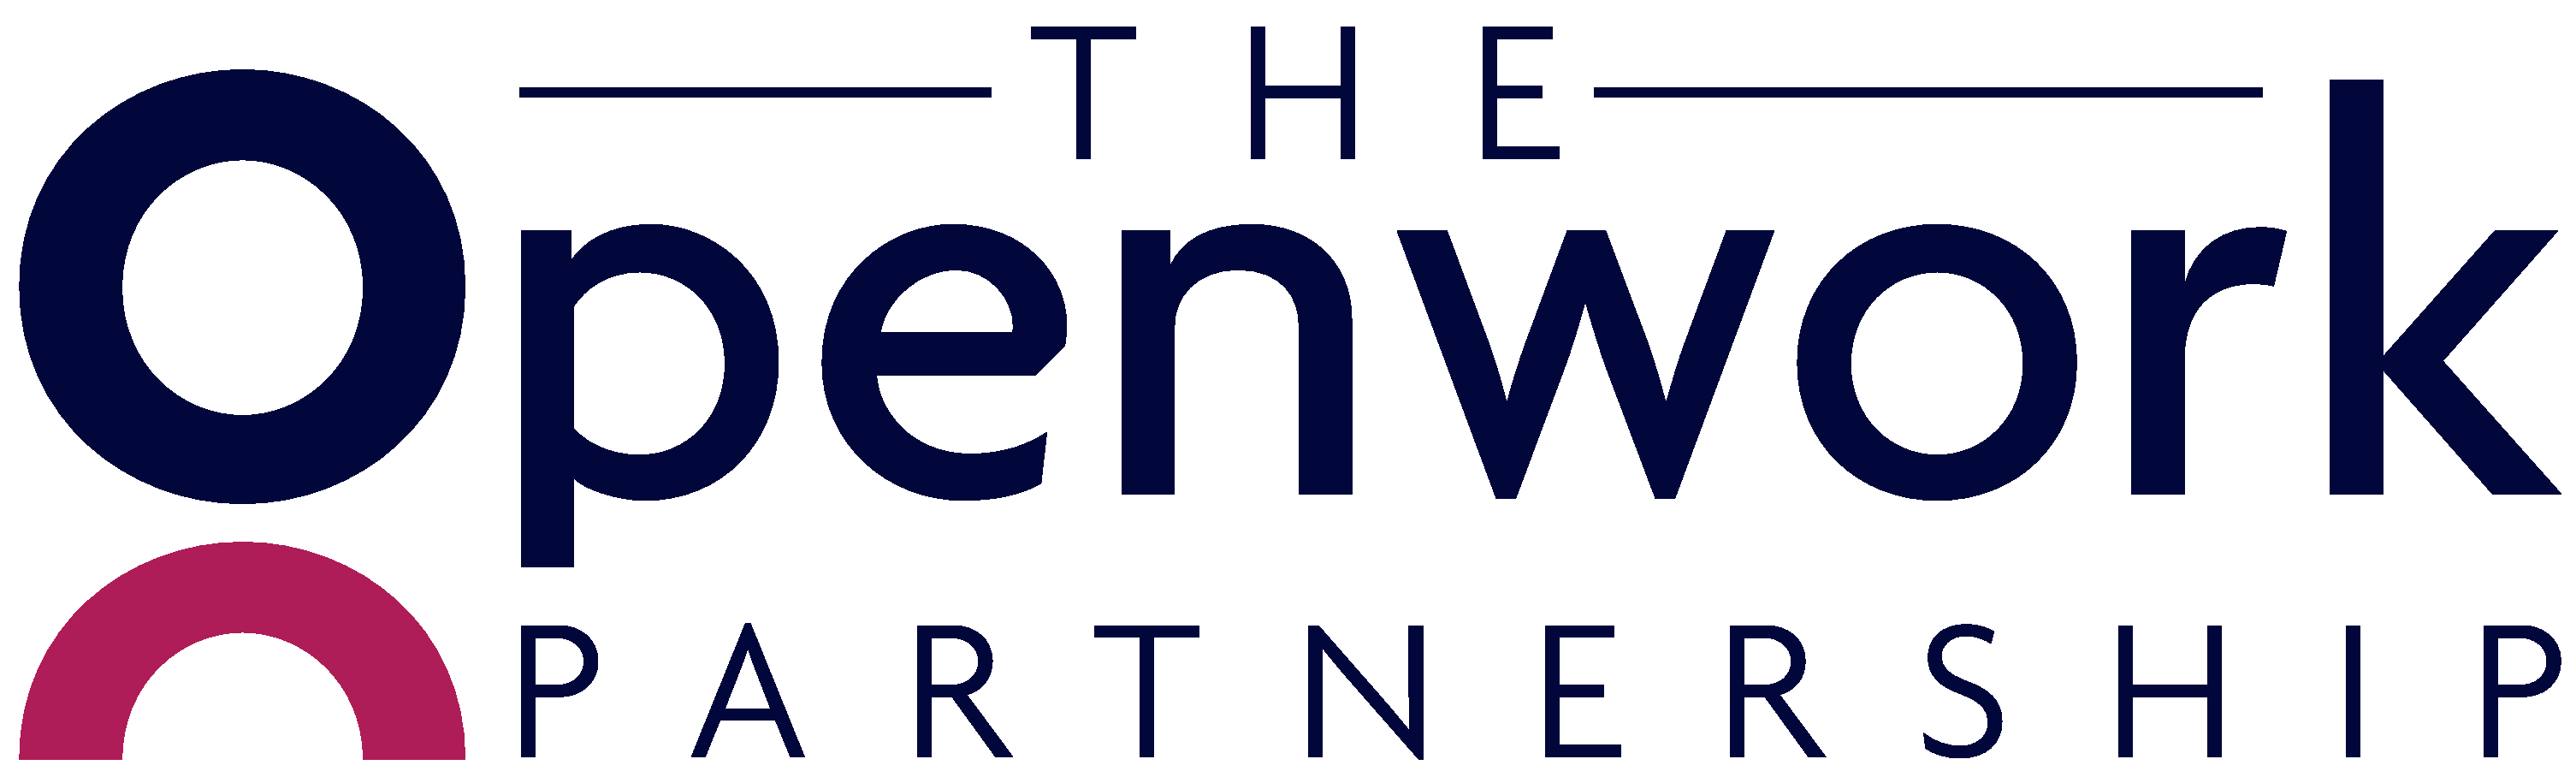 Openwork Partnership logo